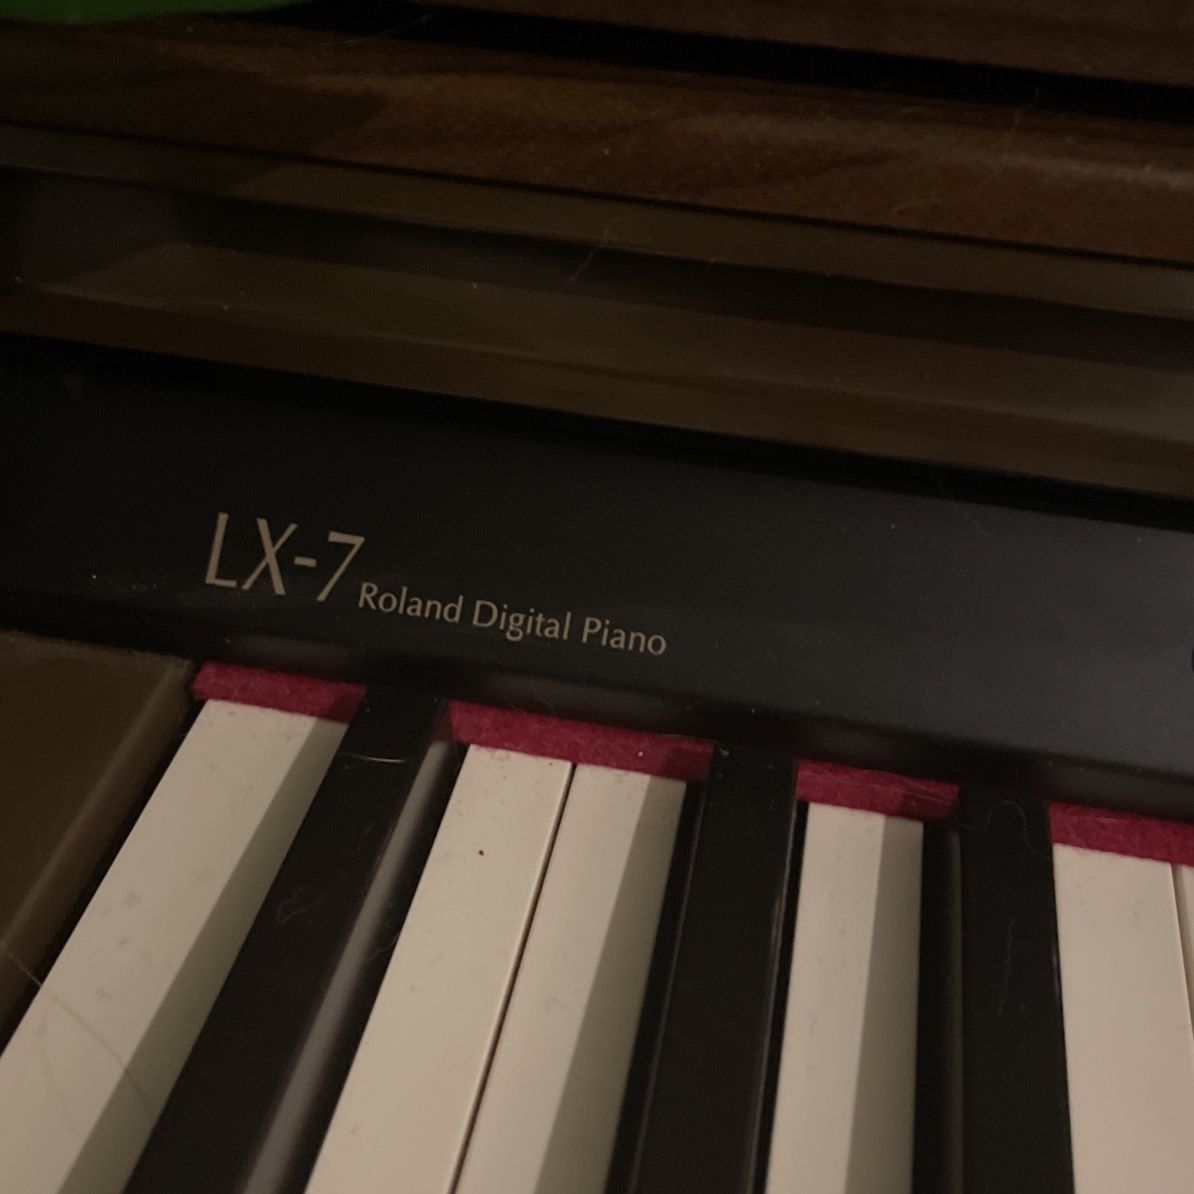 Roland LX-7 digital piano